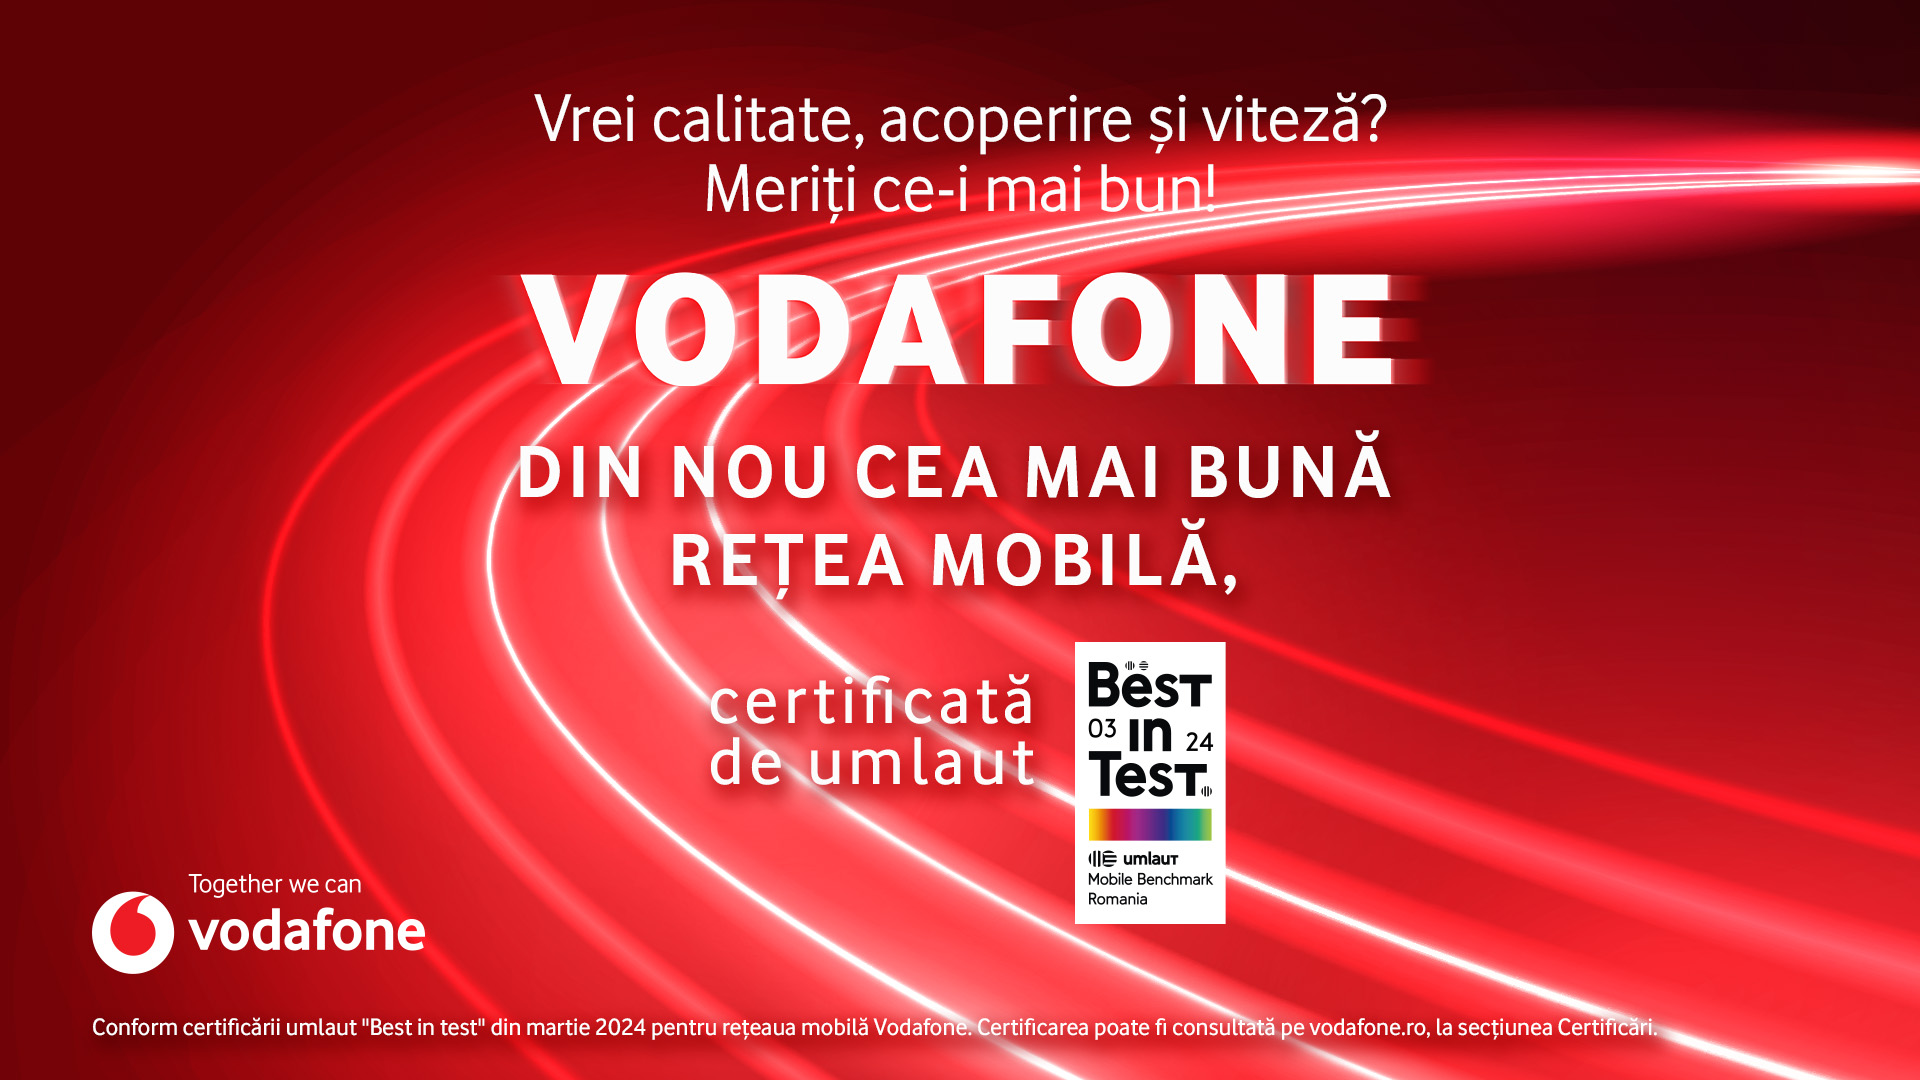 FOTO Vodafone certificare umlaut